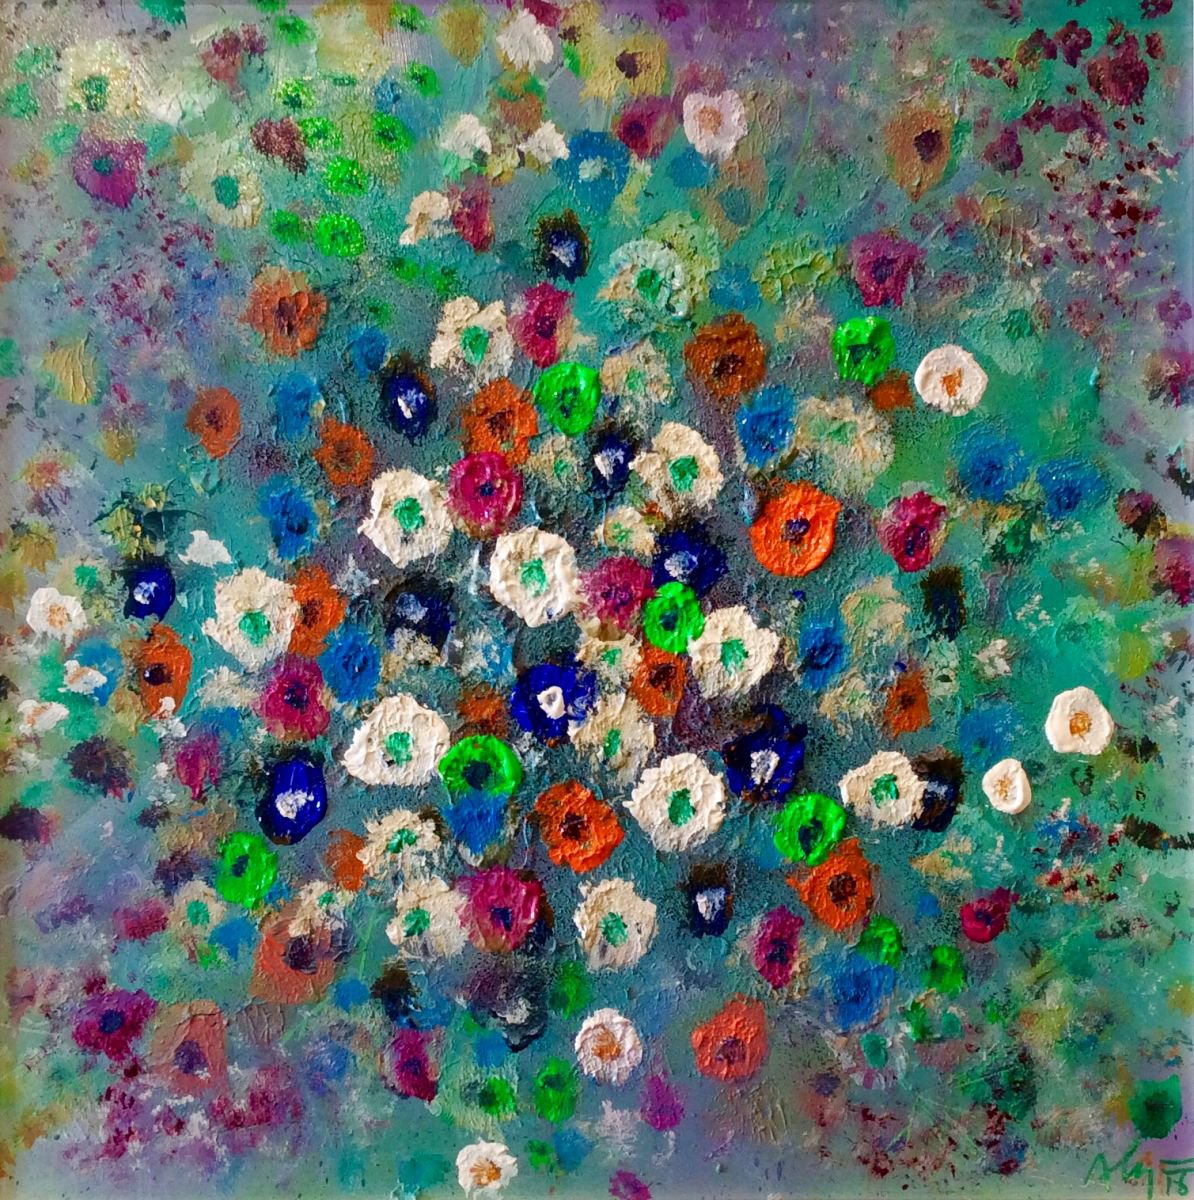 Ocean of flowers XIX by Alejos